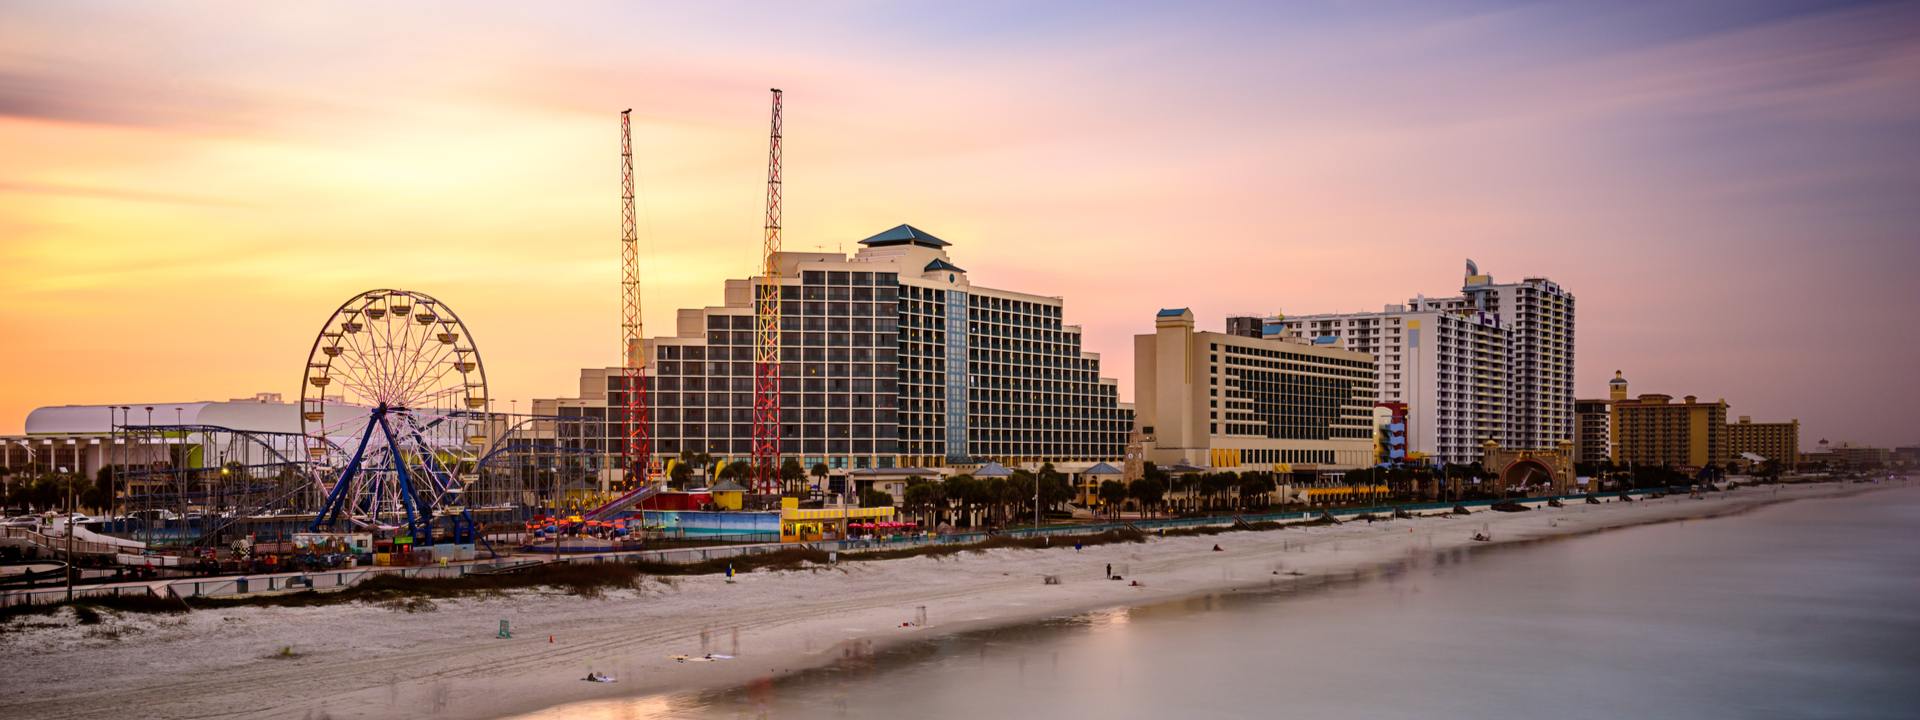 Daytona Beach – One of Florida’s Top Beach Destinations